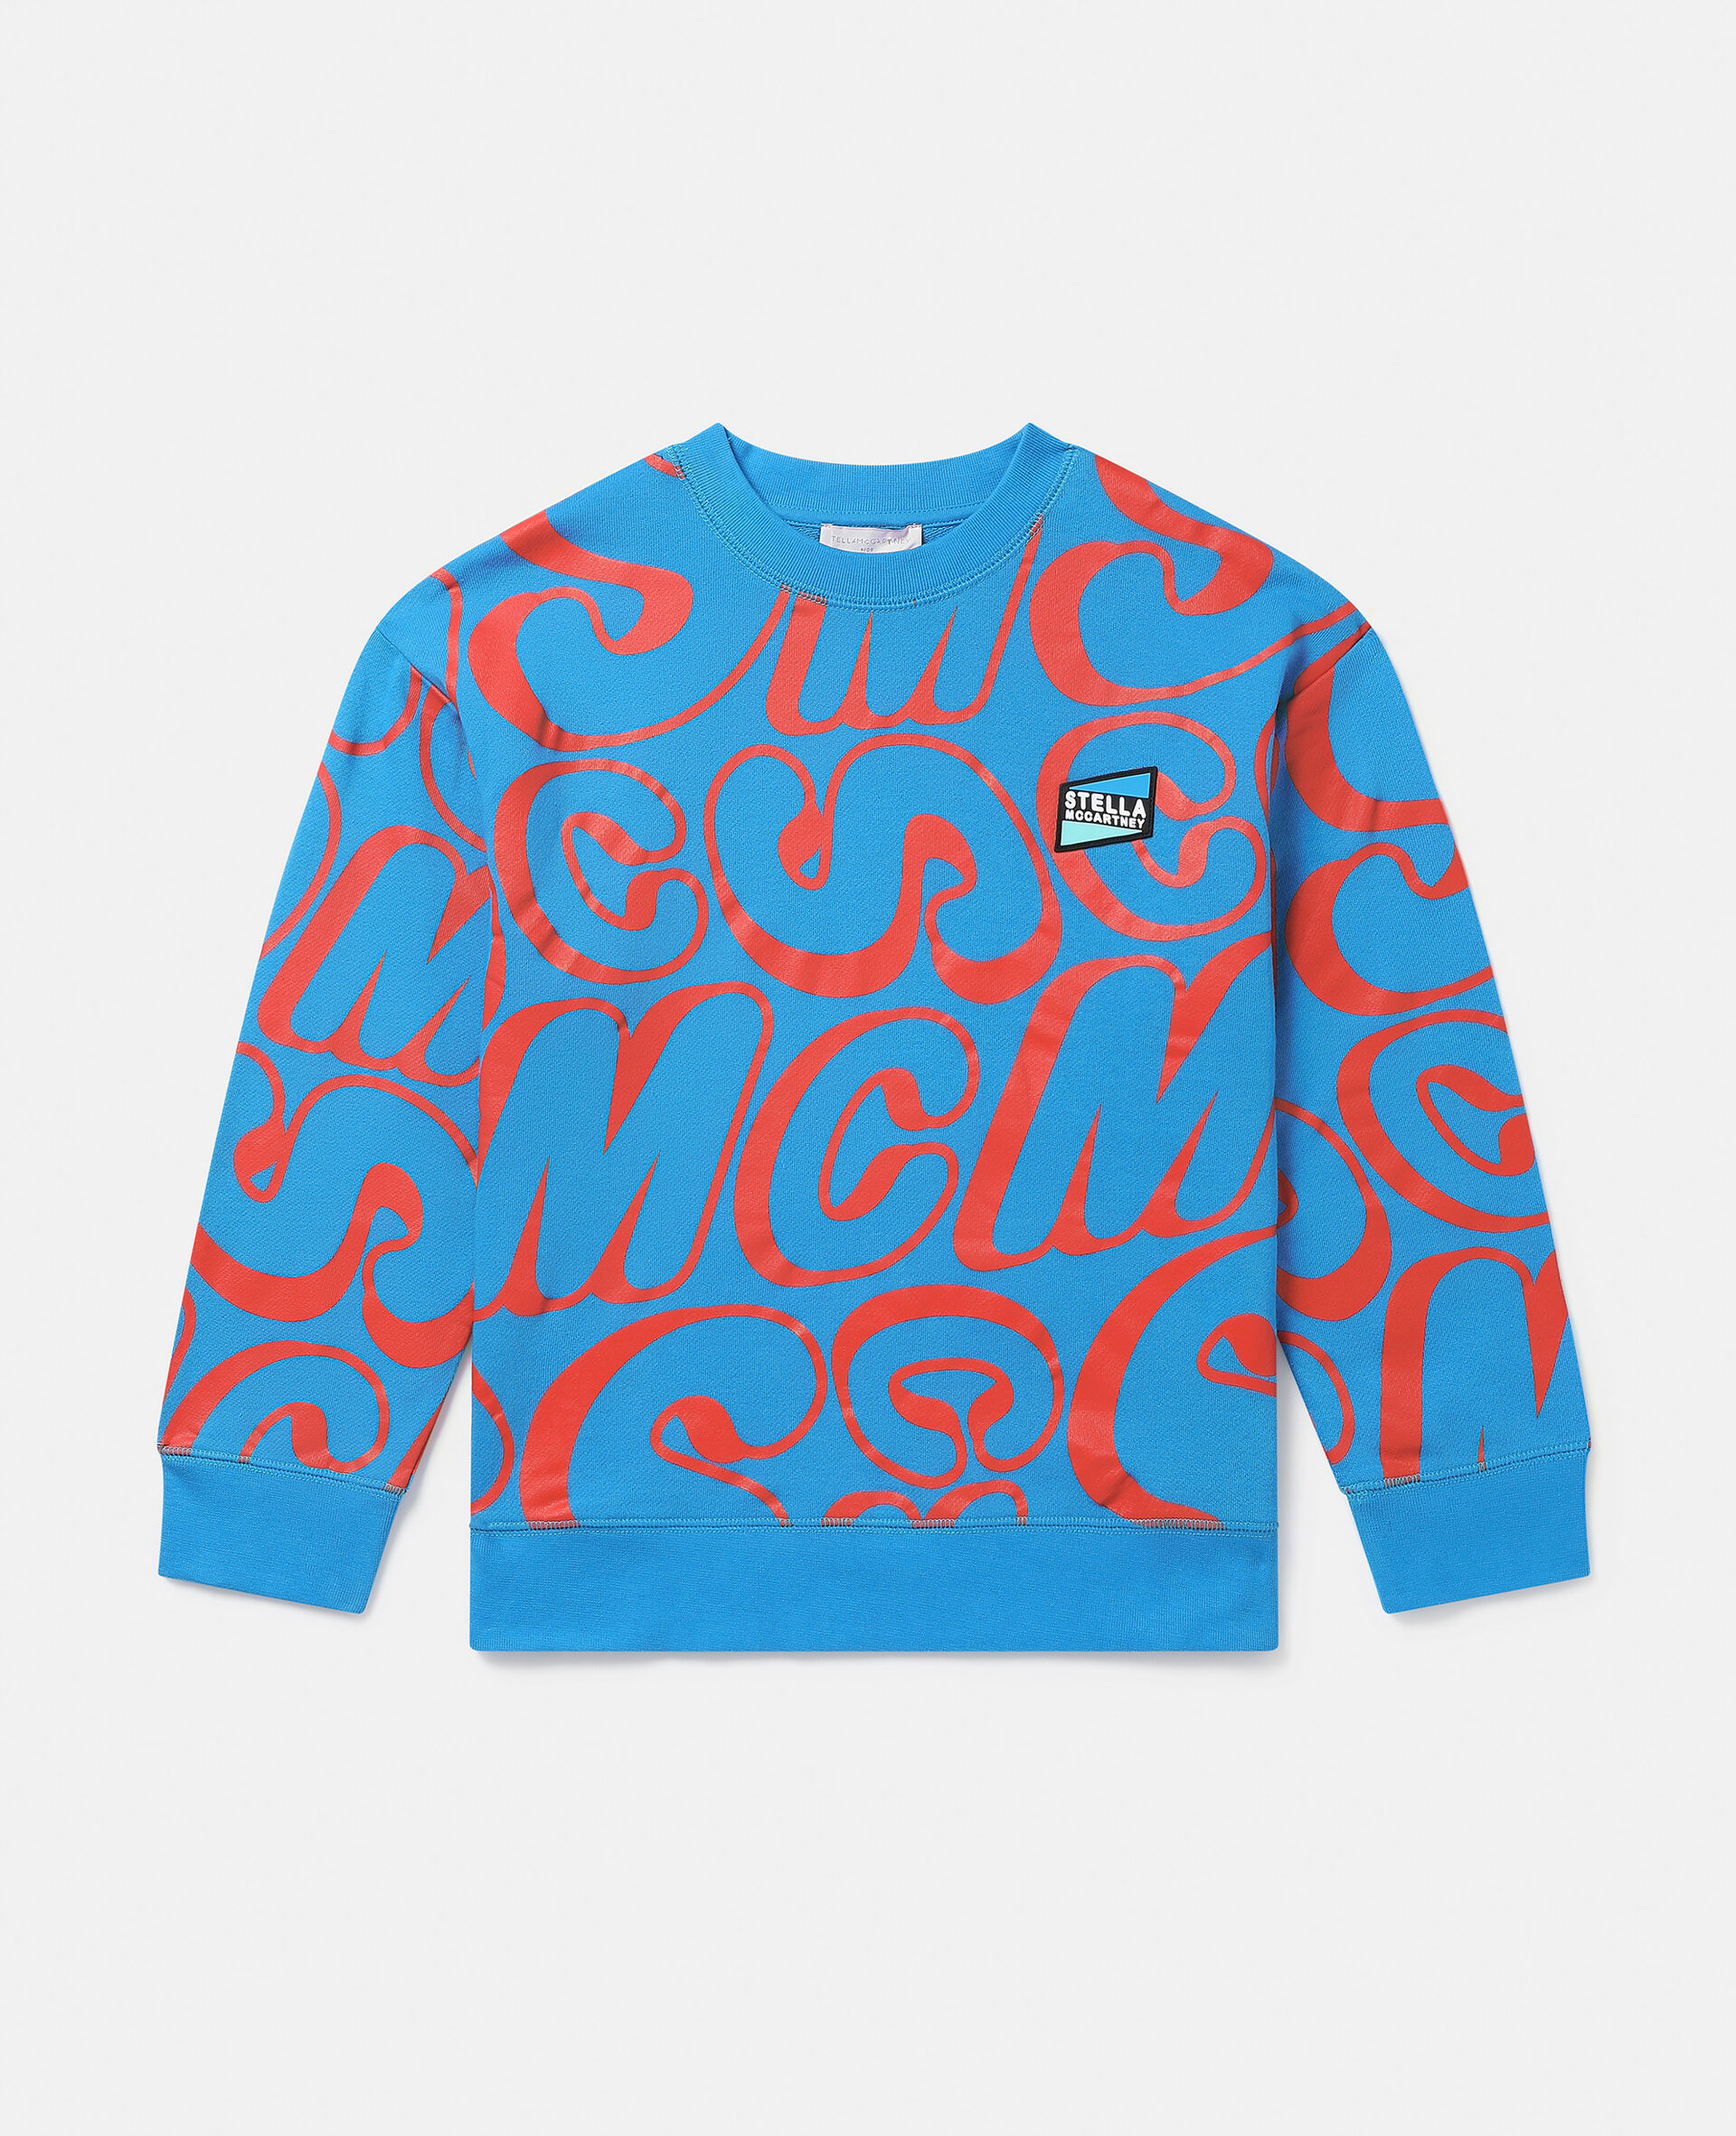 SMC Print Sweatshirt-Multicolour-large image number 0